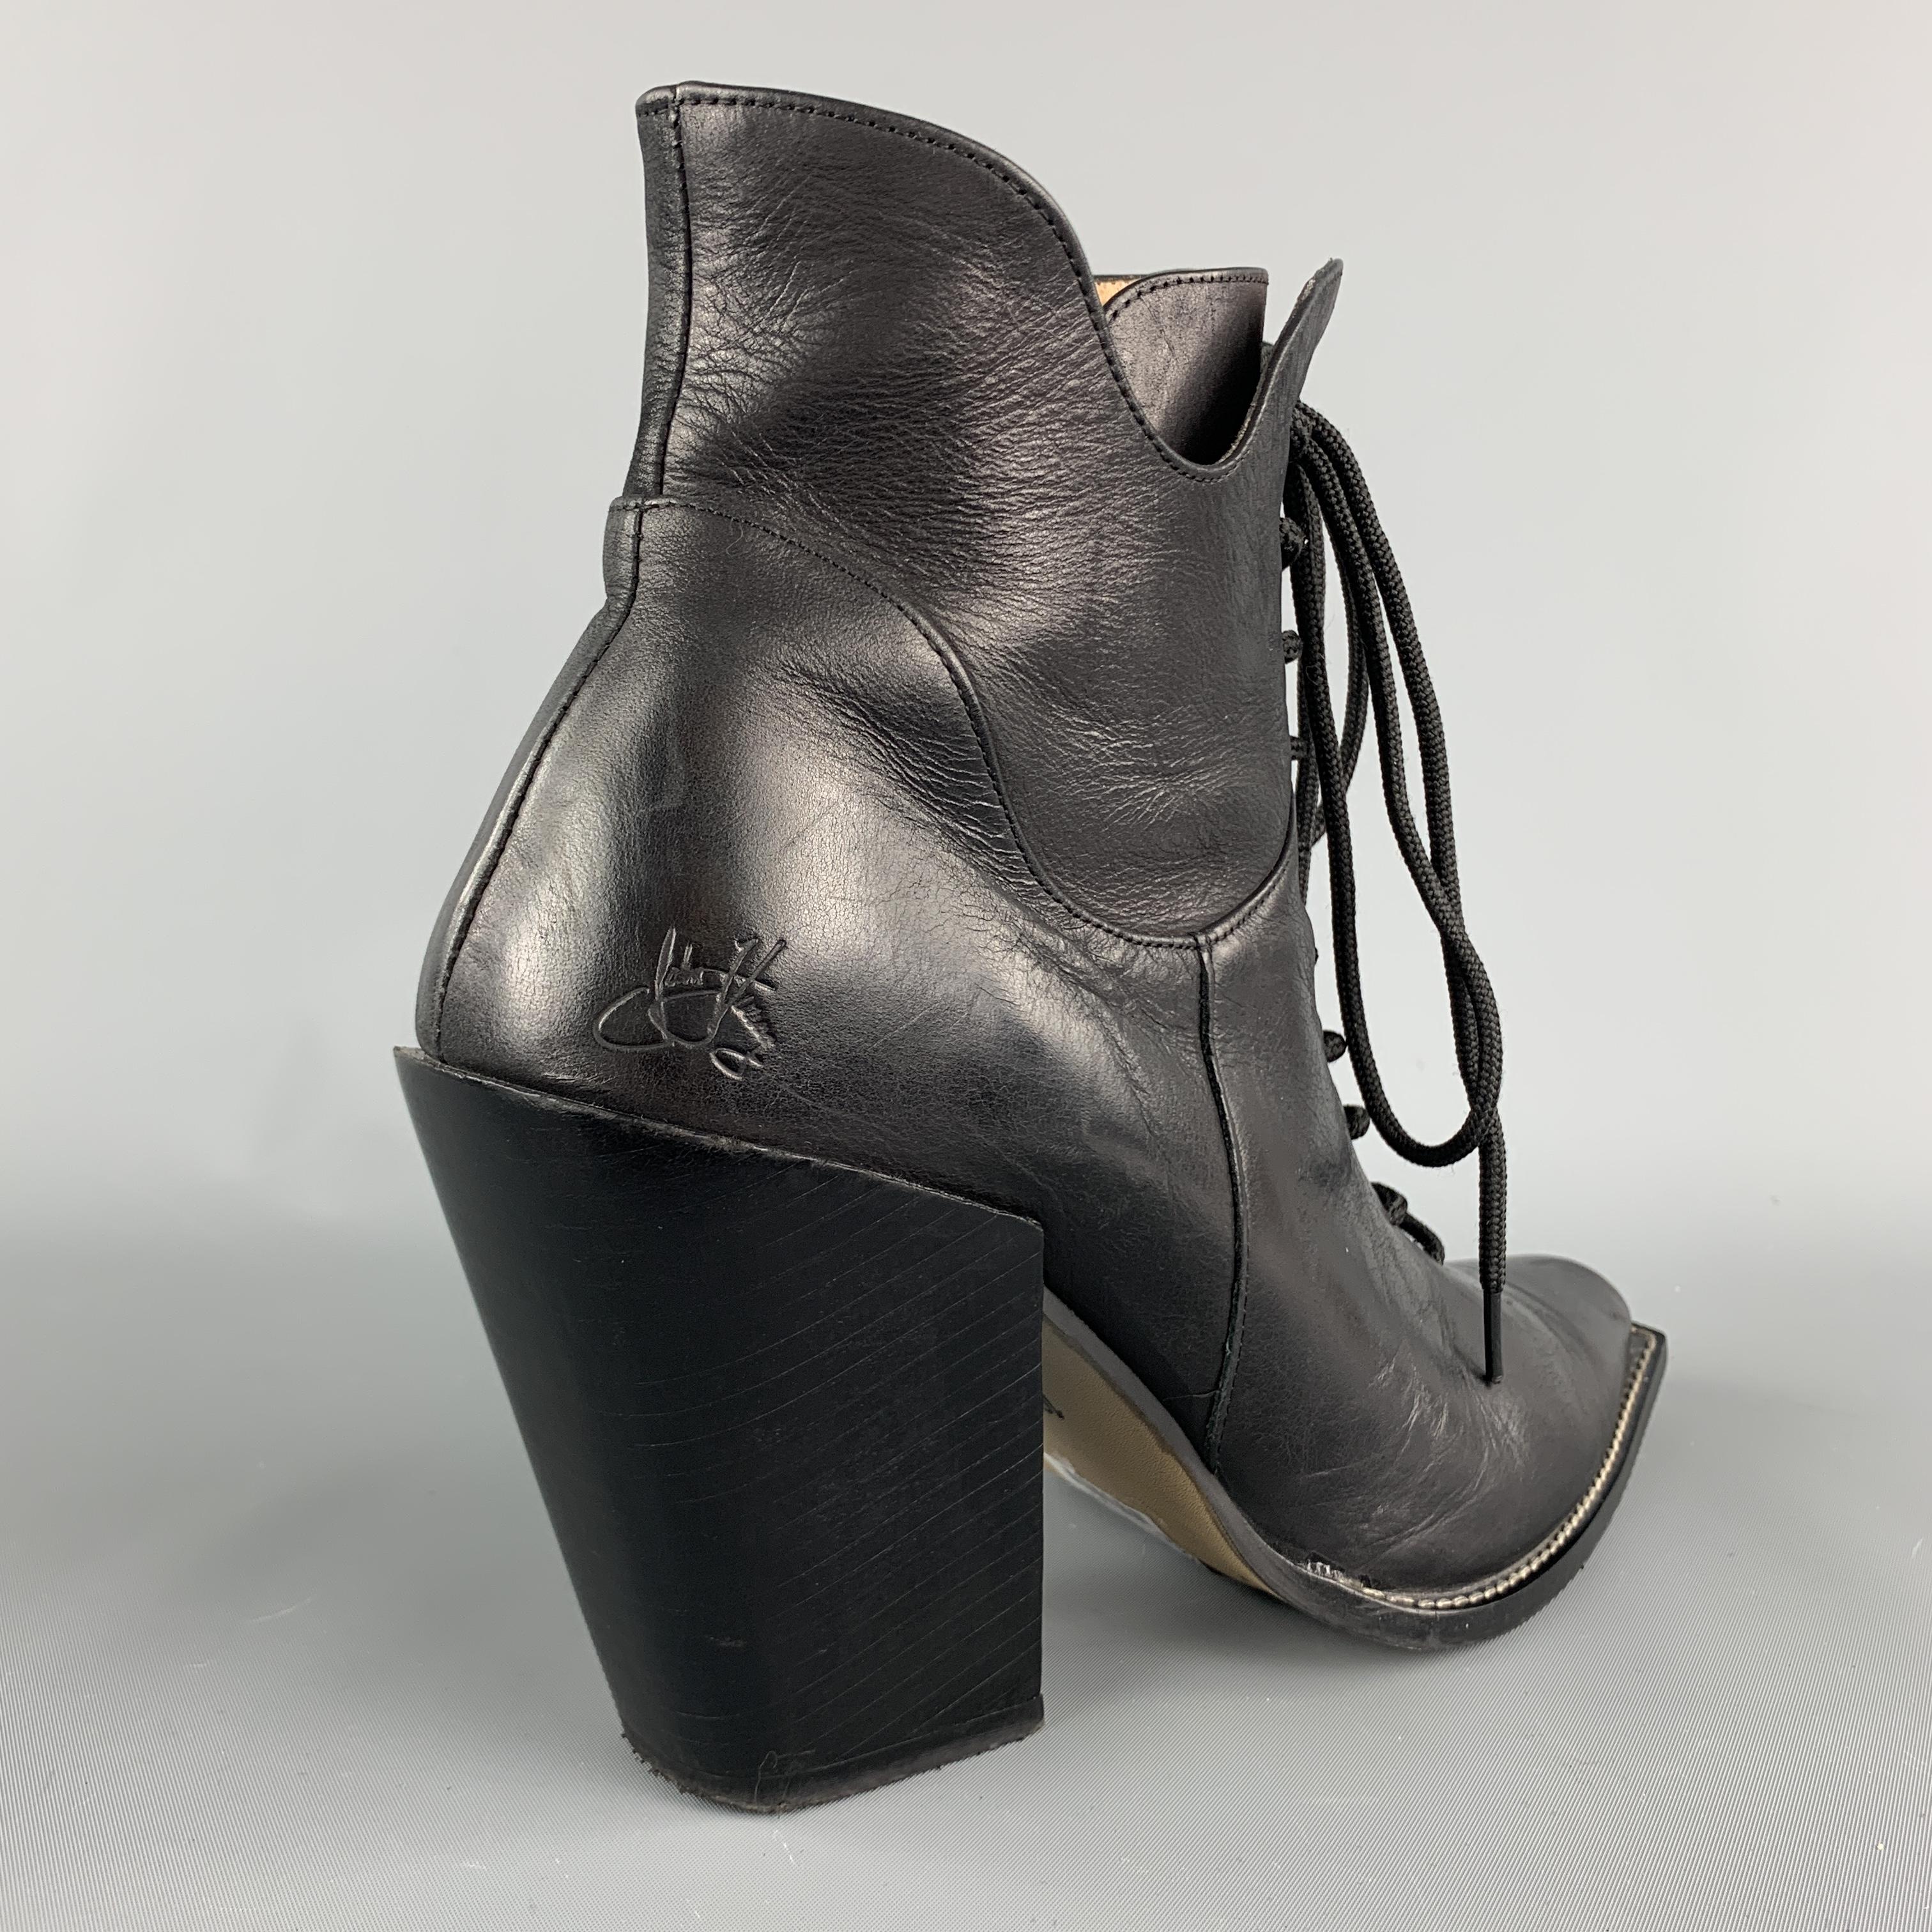 JOHN FLUEVOG Prince George Size 10 Black Leather Lace Up Ankle Boots 1